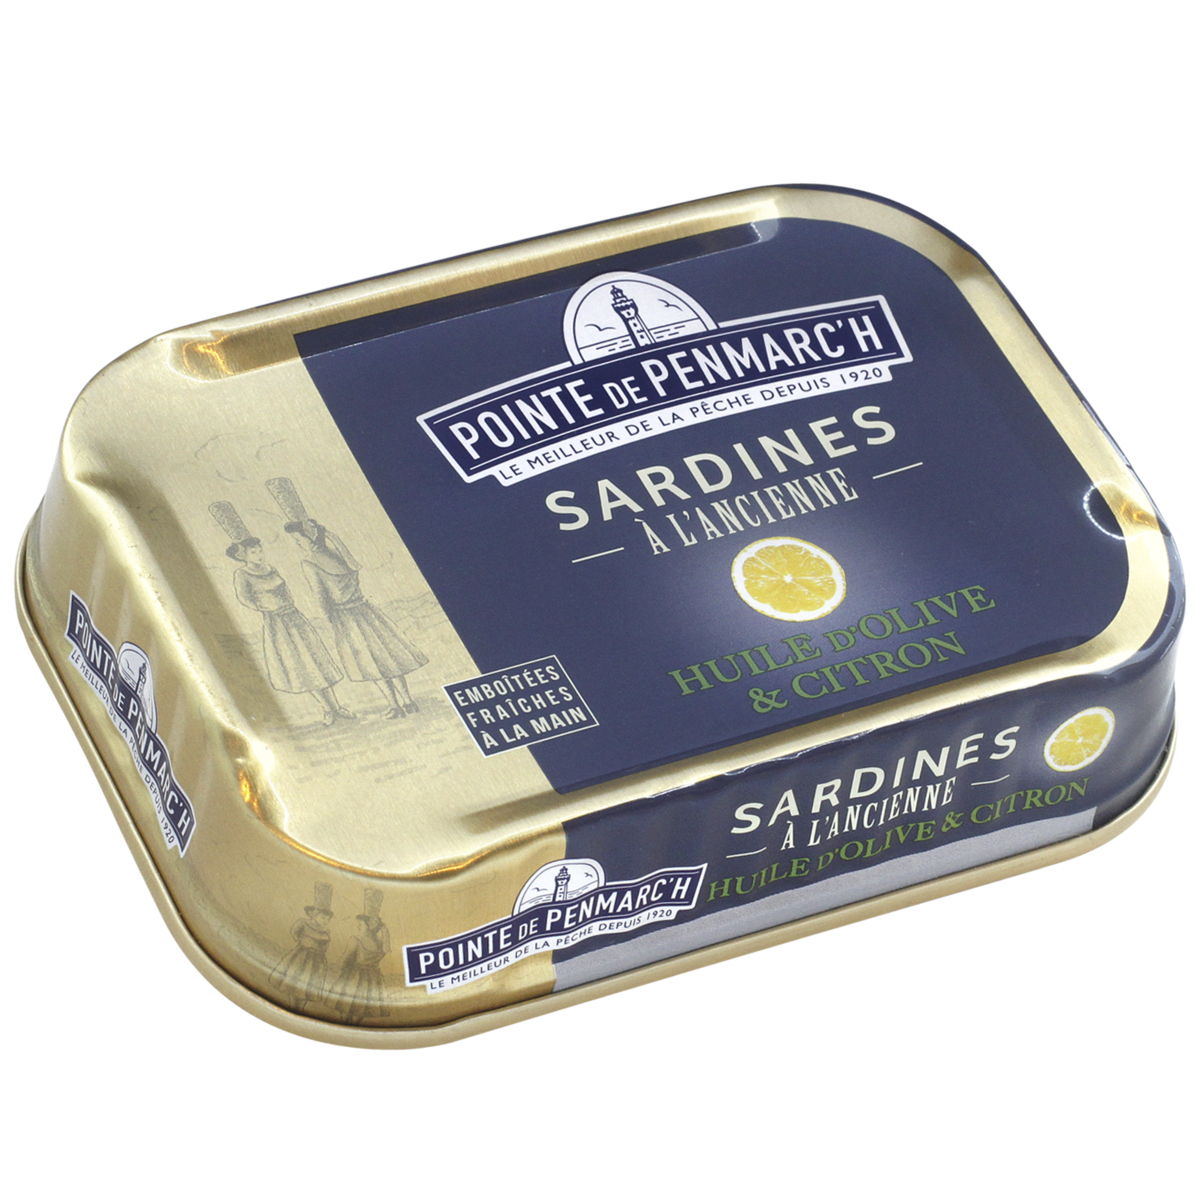 Sardinen in Olivenöl und Zitrone, La Pointe de Penmarch, Bretagne 0,115 kg